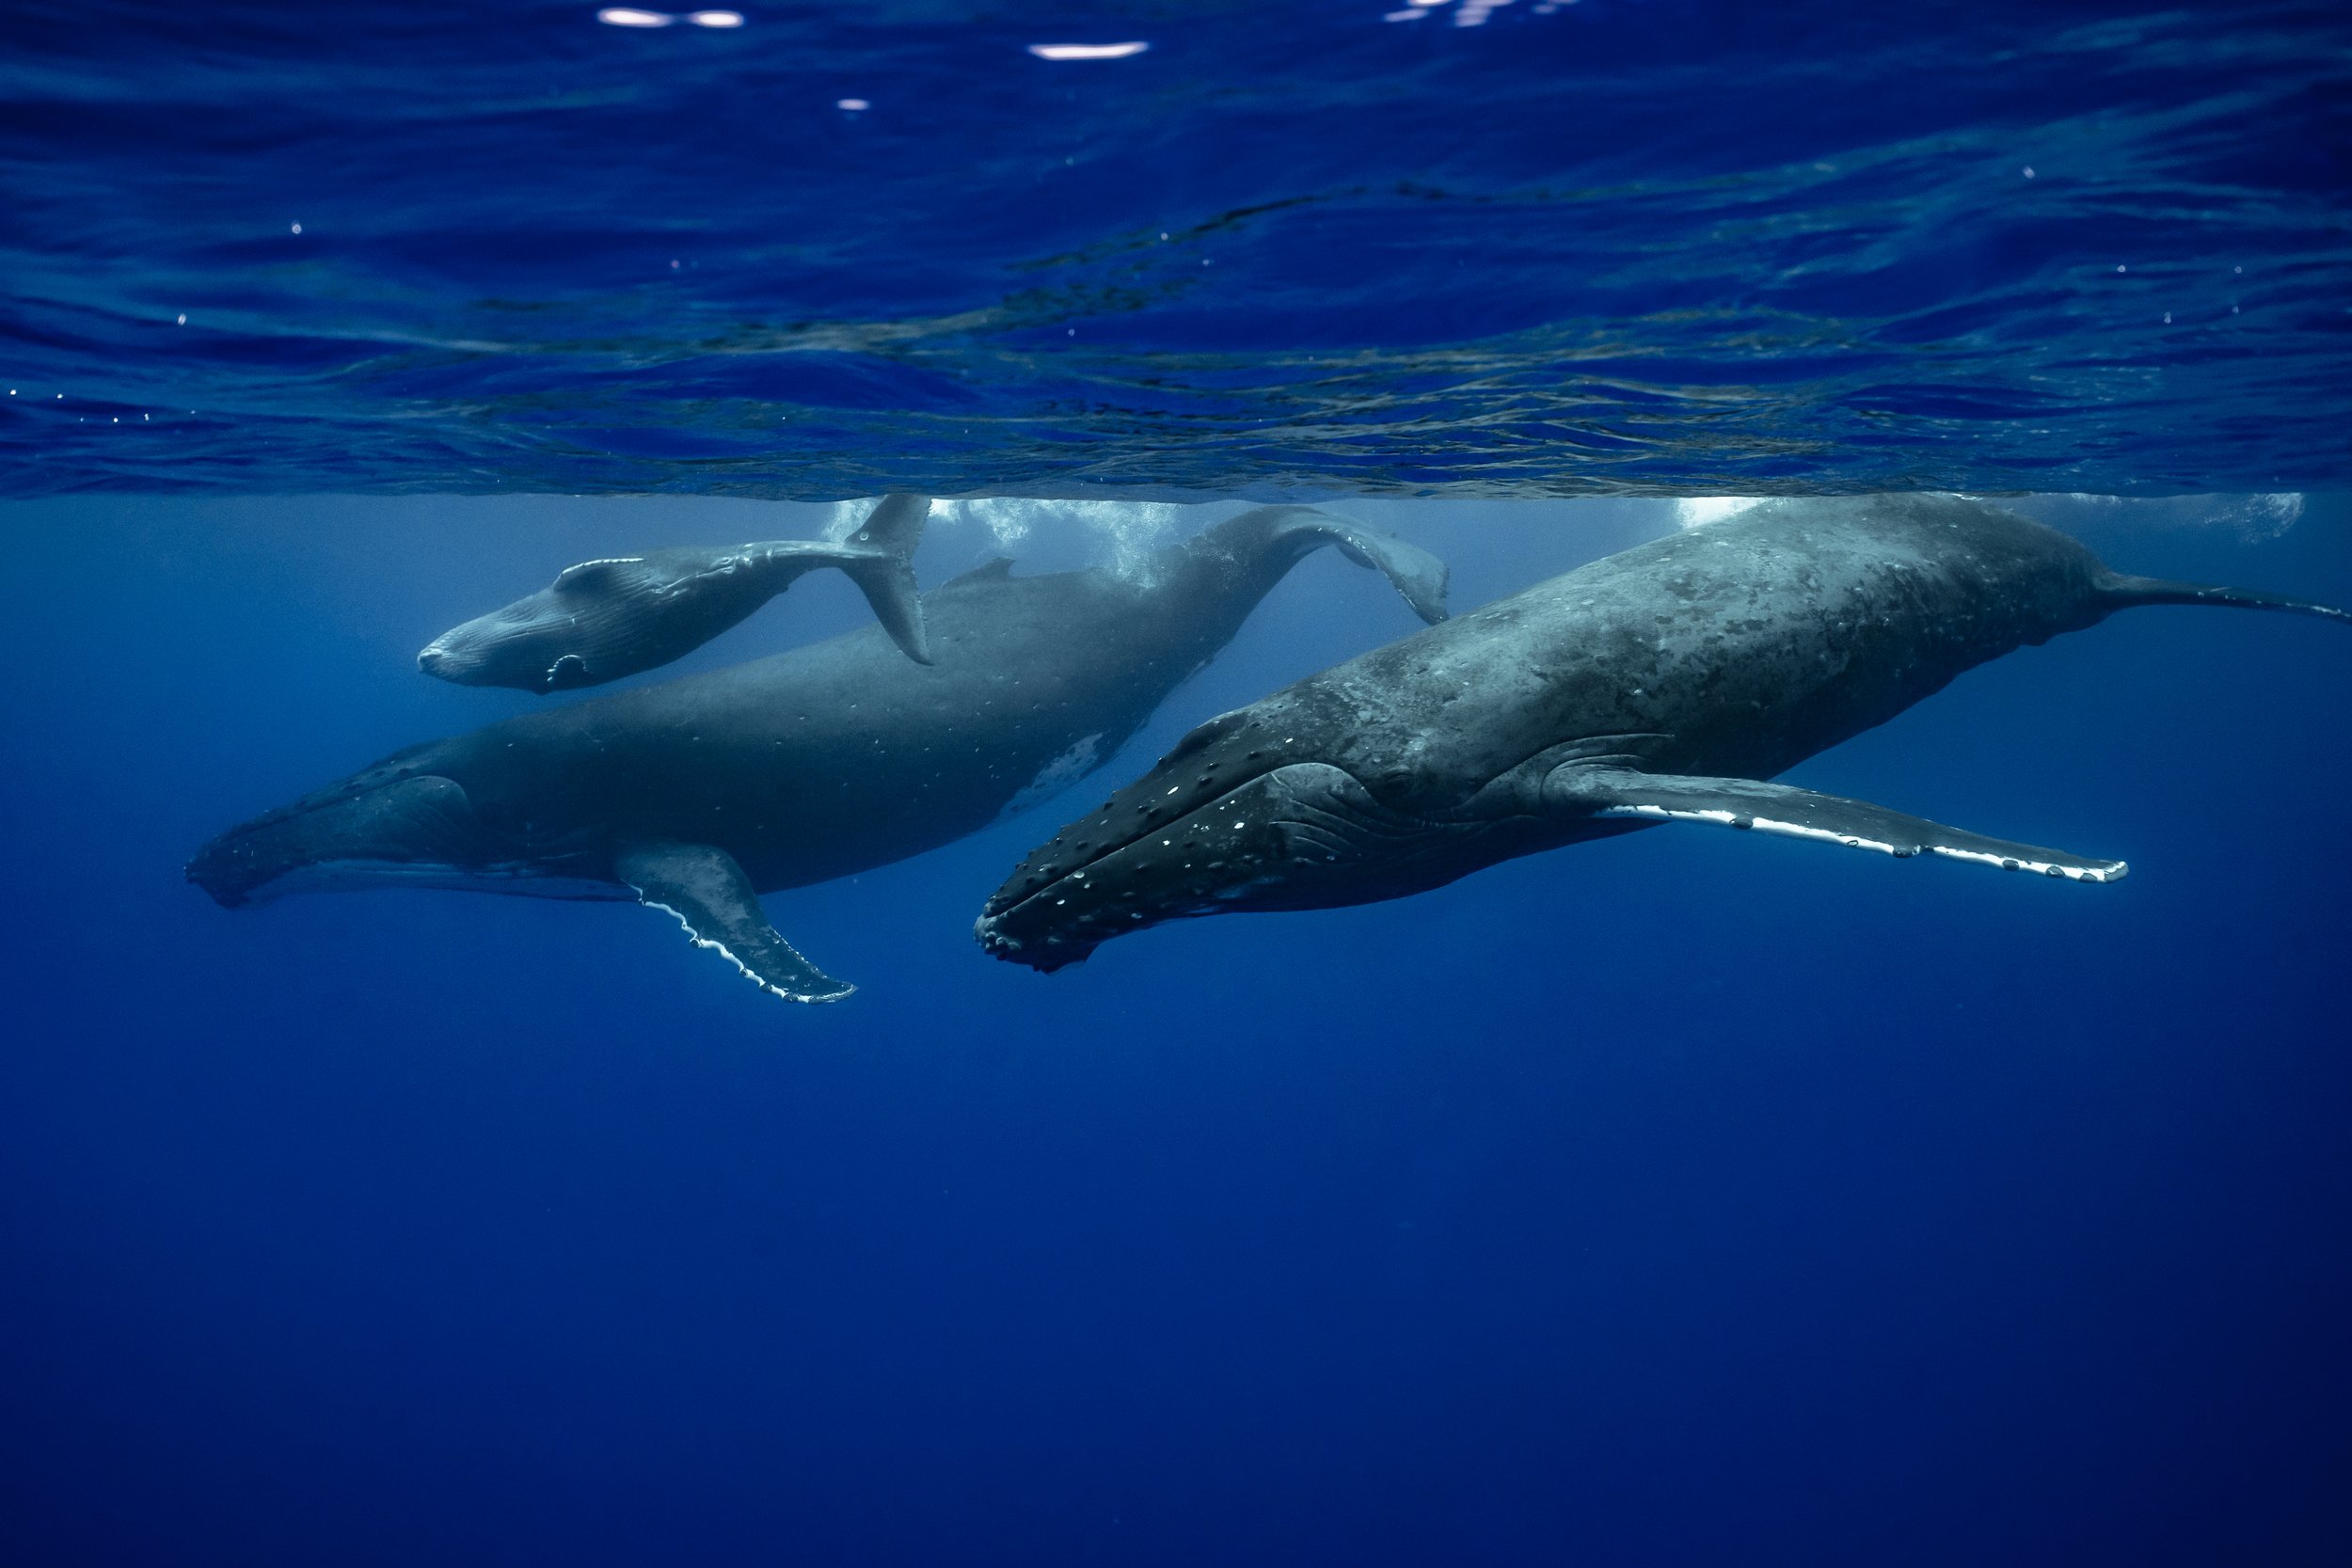 rurutu-2020-inertia-network-matt-reichel-one-with-whales-swim-with-humpback-whales-french-polynesia-week-one-re-edited-139.jpg